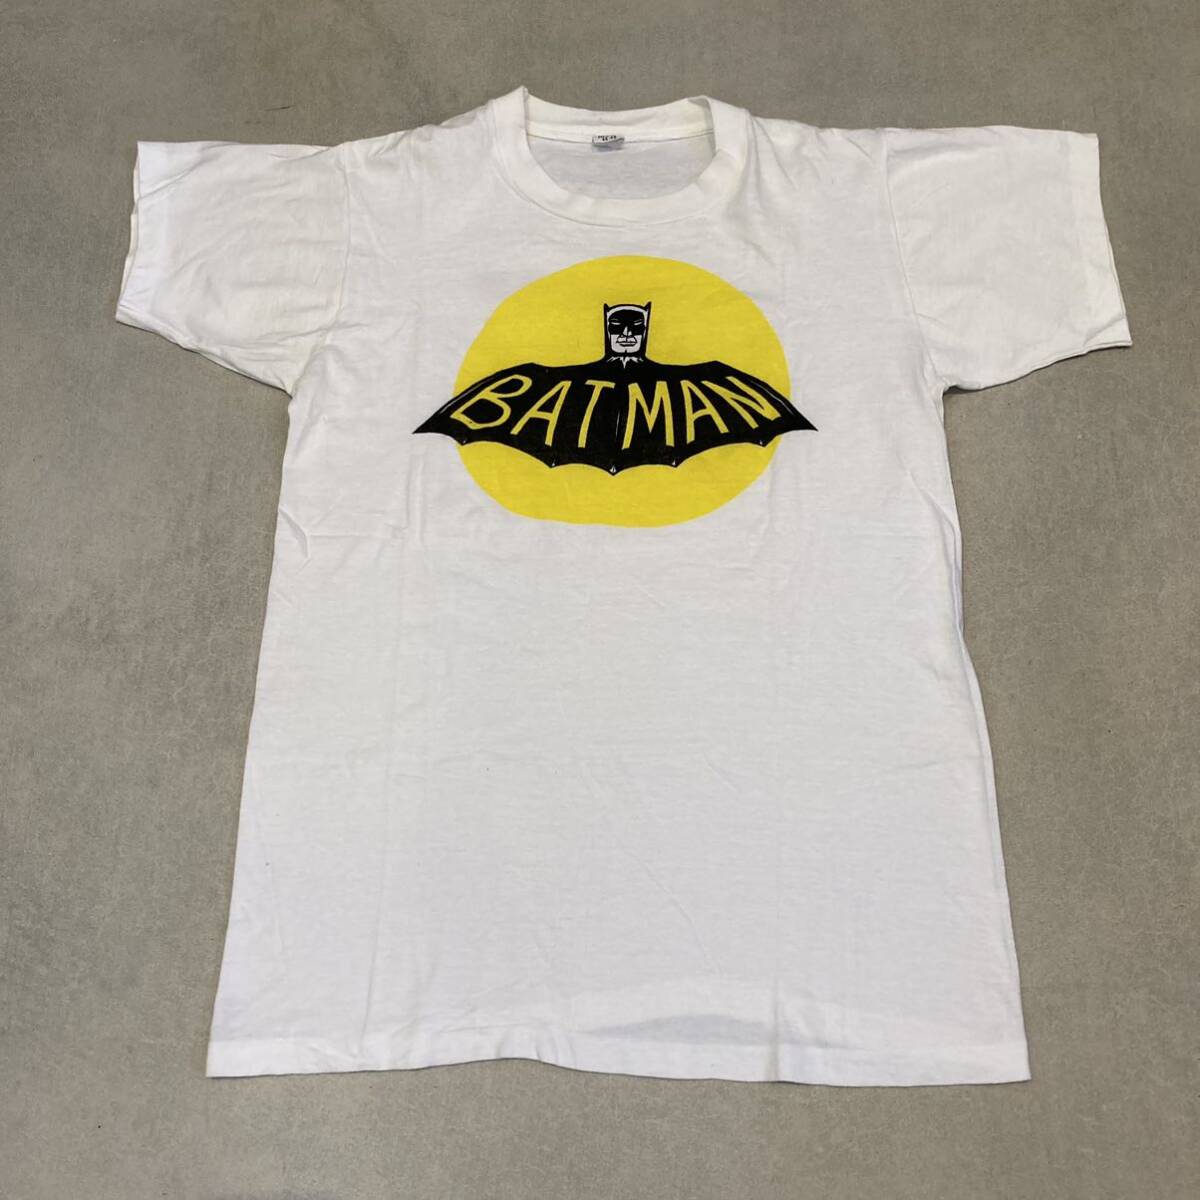 RUSSELL BATMAN Tee Tシャツ vintage M バットマン ラッセル ビンテージ 激レア